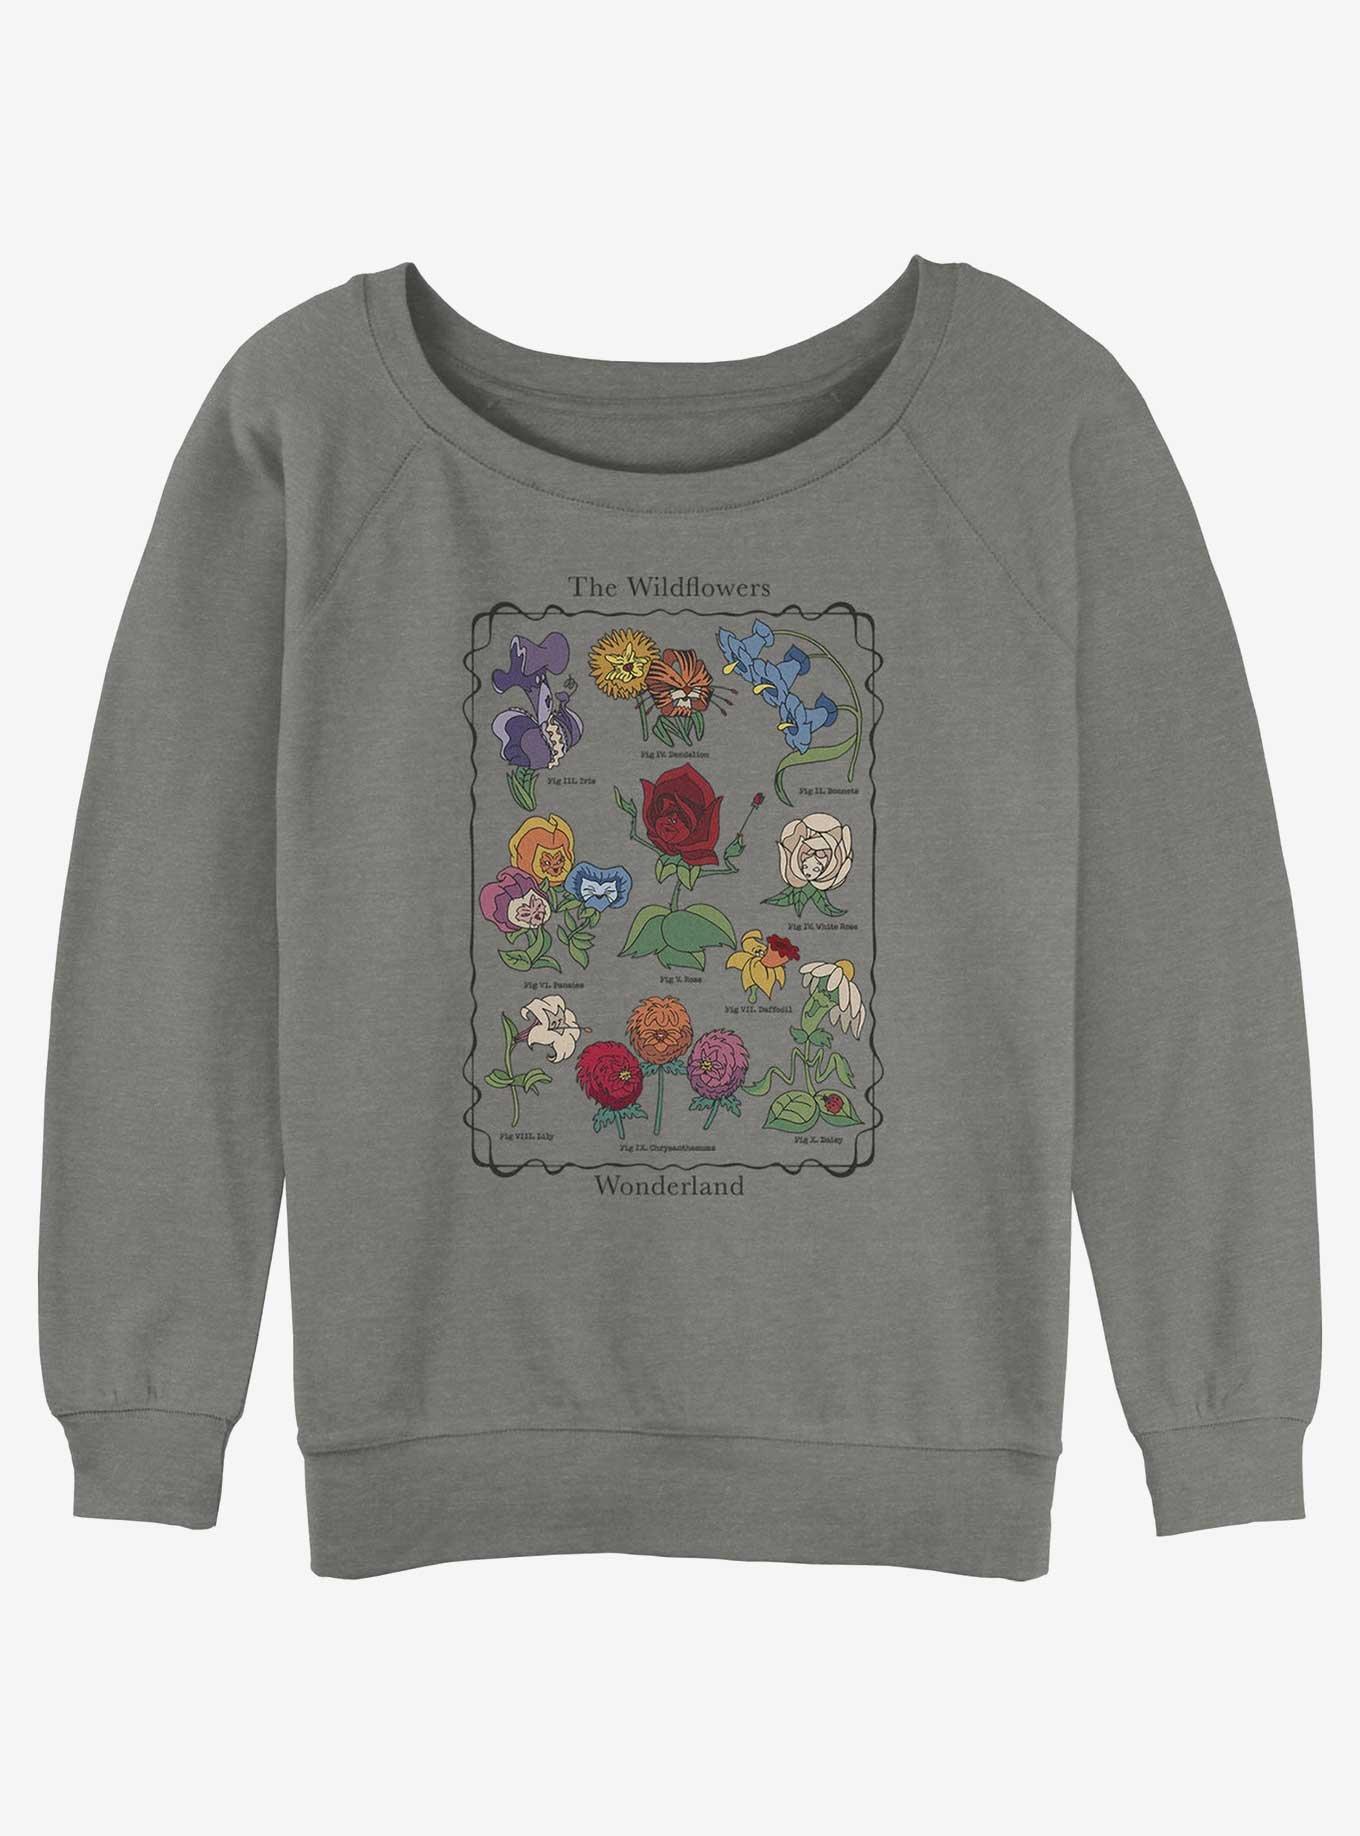 Disney Alice In Wonderland The Wildflowers Womens Slouchy Sweatshirt - GREY